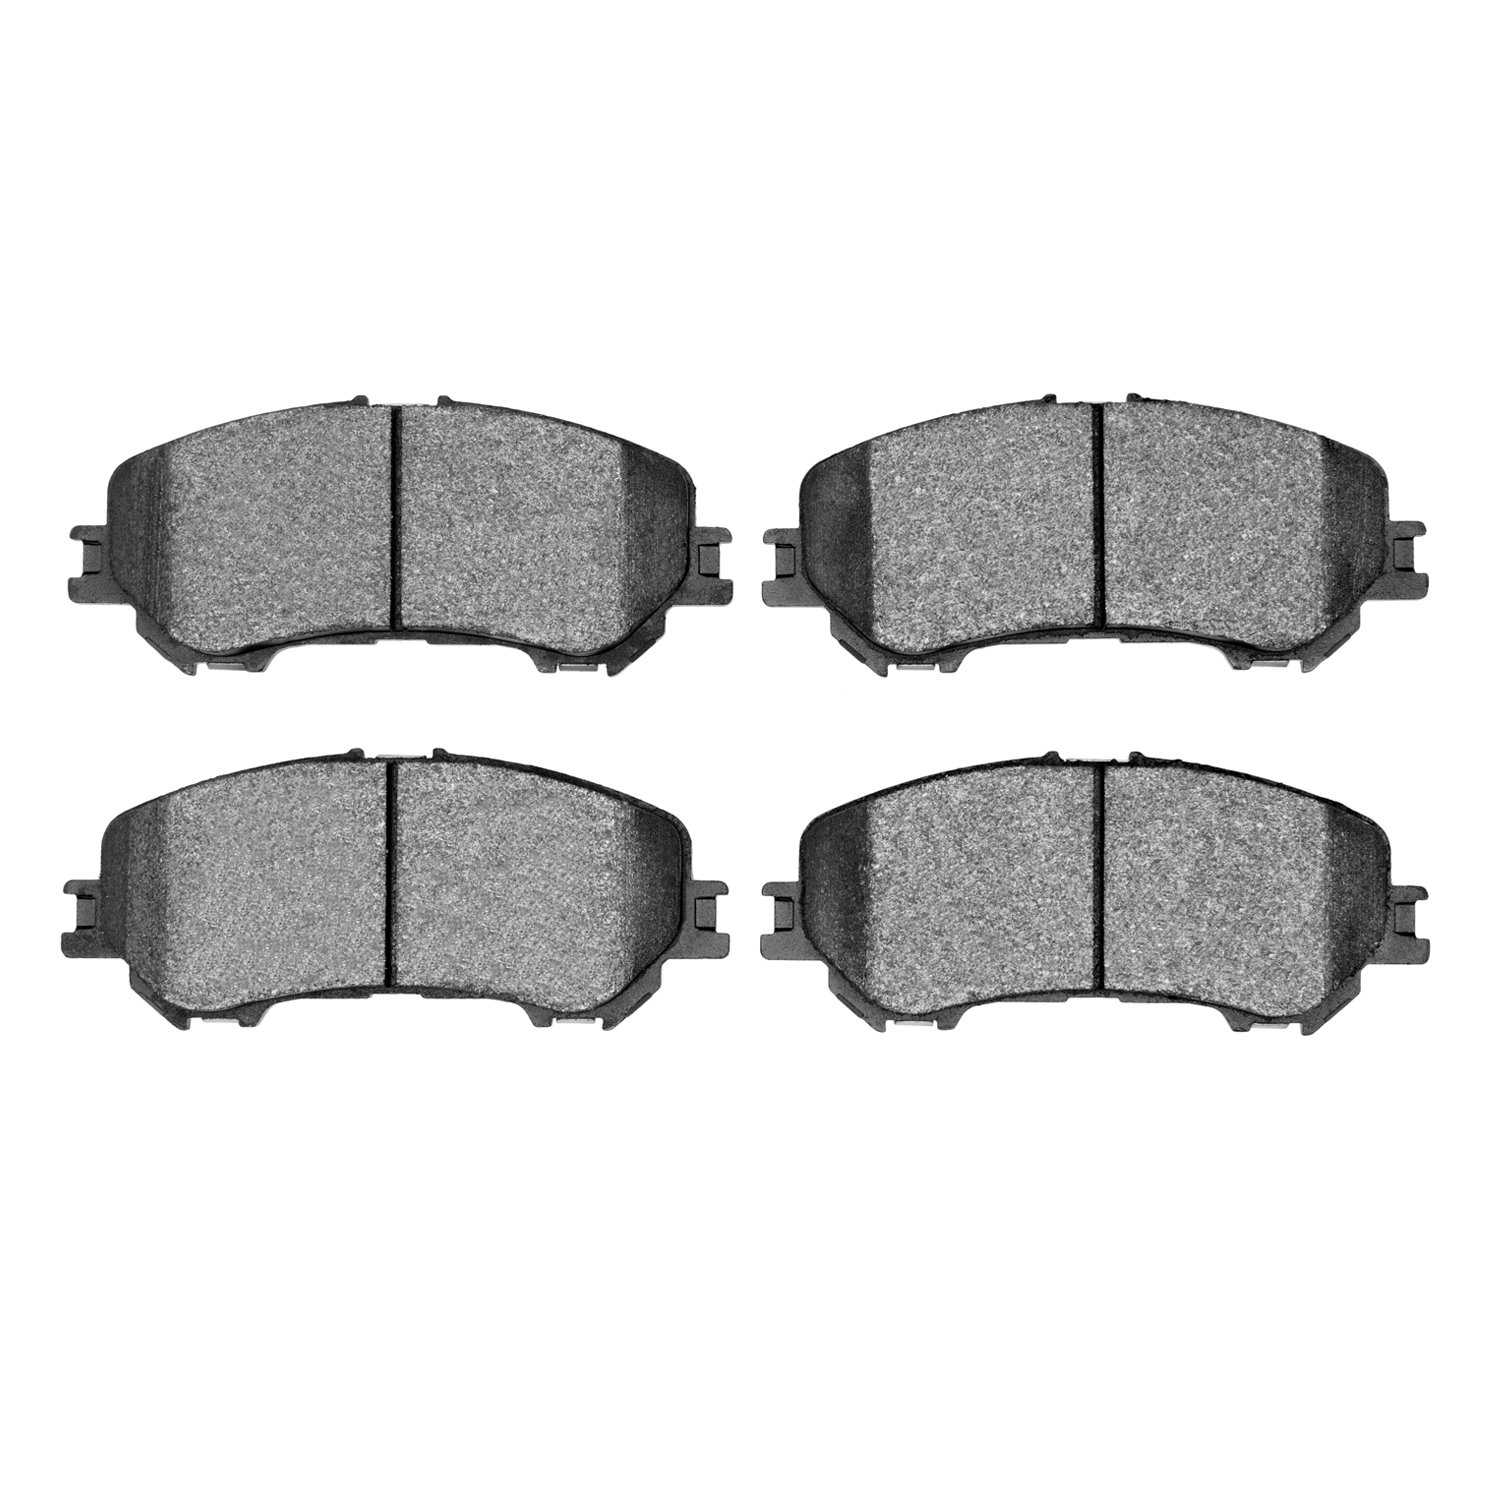 1600-1737-00 5000 Euro Ceramic Brake Pads, Fits Select Multiple Makes/Models, Position: Front